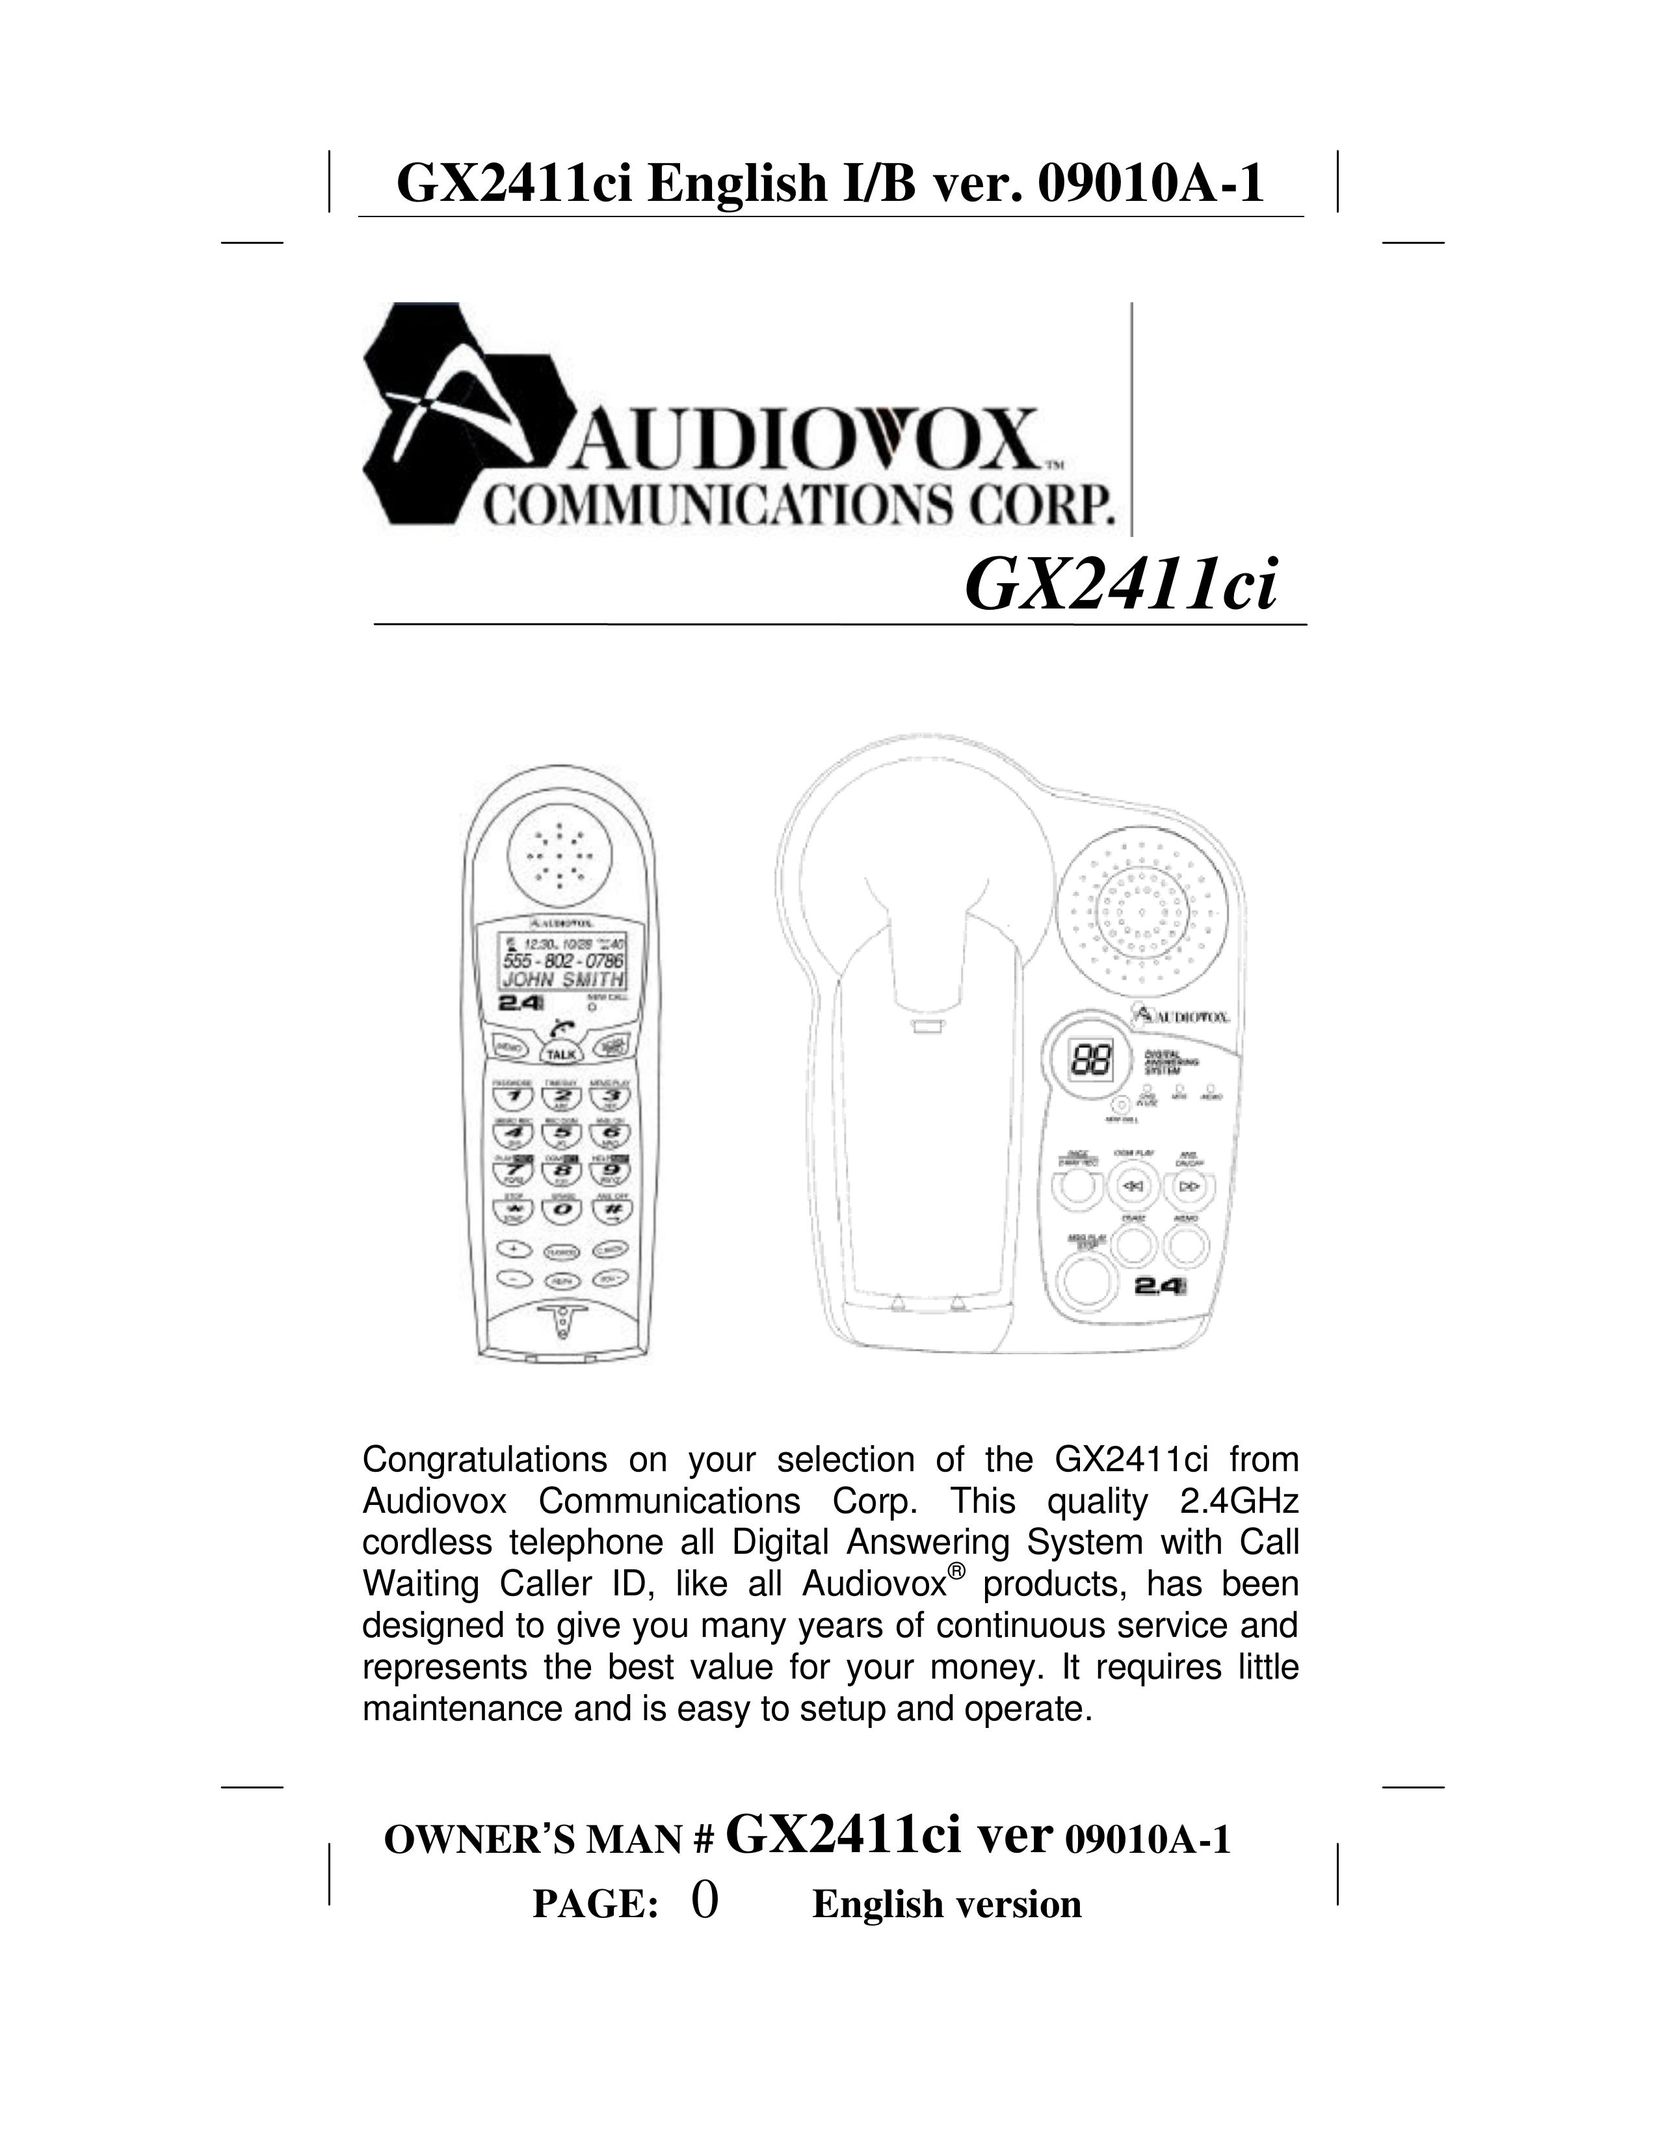 Audiovox GX2411ci Cordless Telephone User Manual